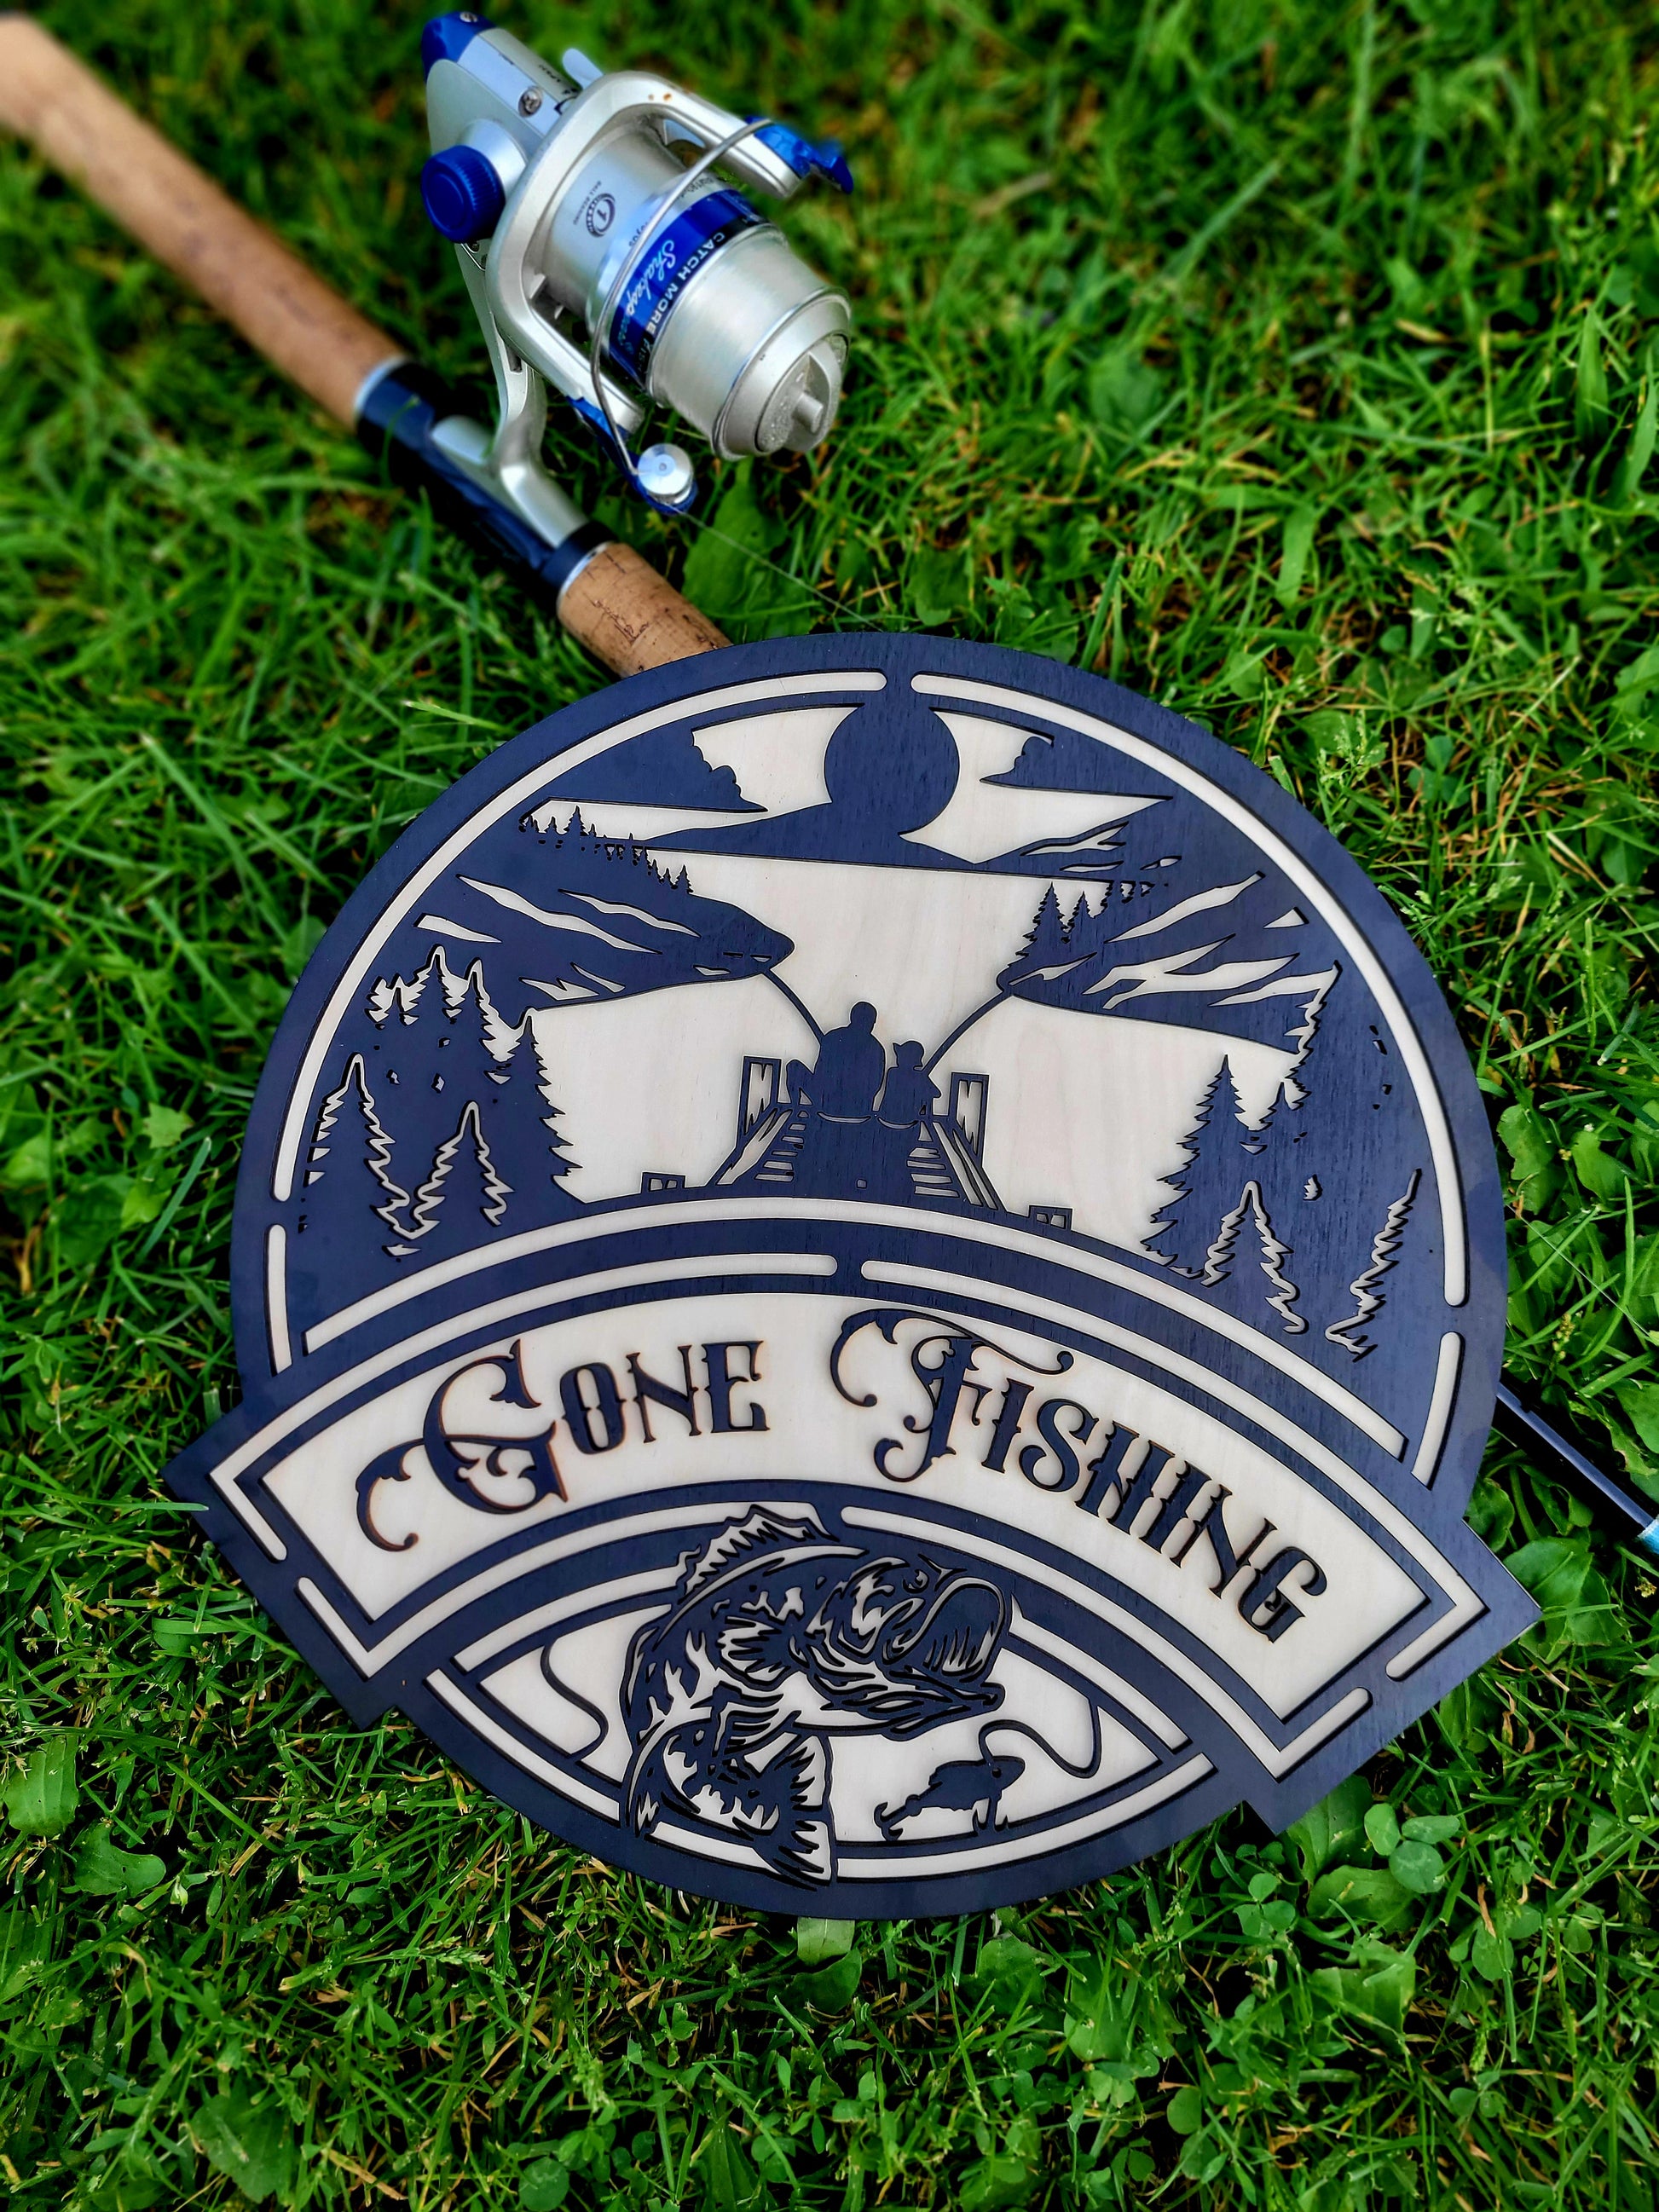 Gone fishing sign – Krafty Design Co.